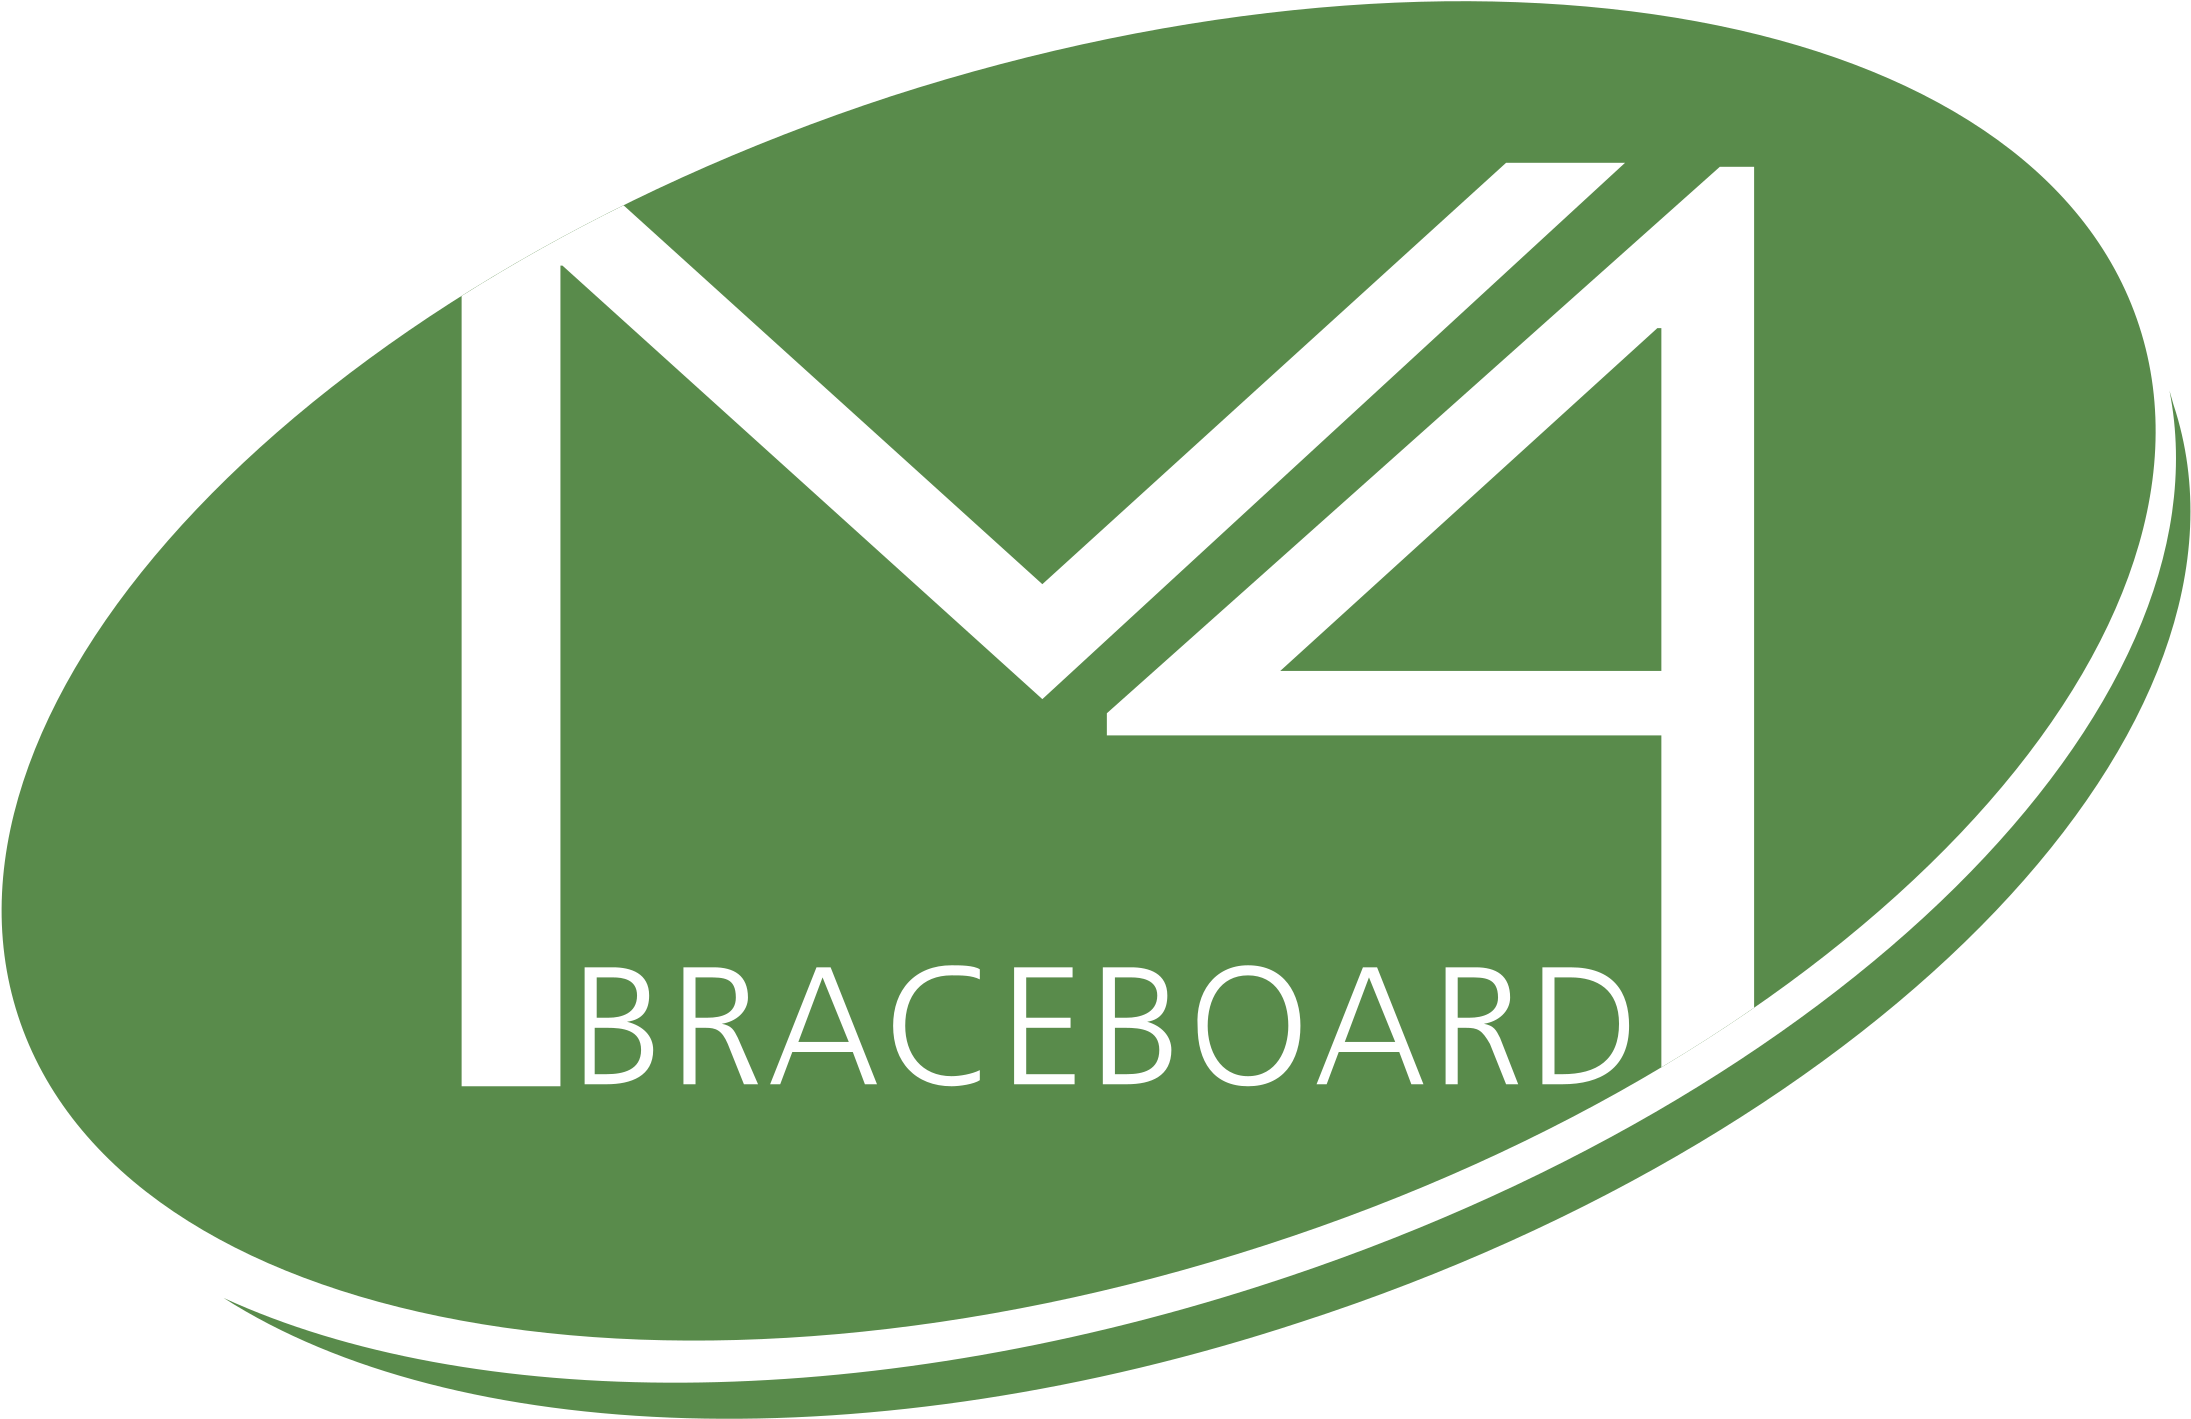 M4 Braceboard Logo Png Transparent - Logos M4 Clipart (2400x2400), Png Download